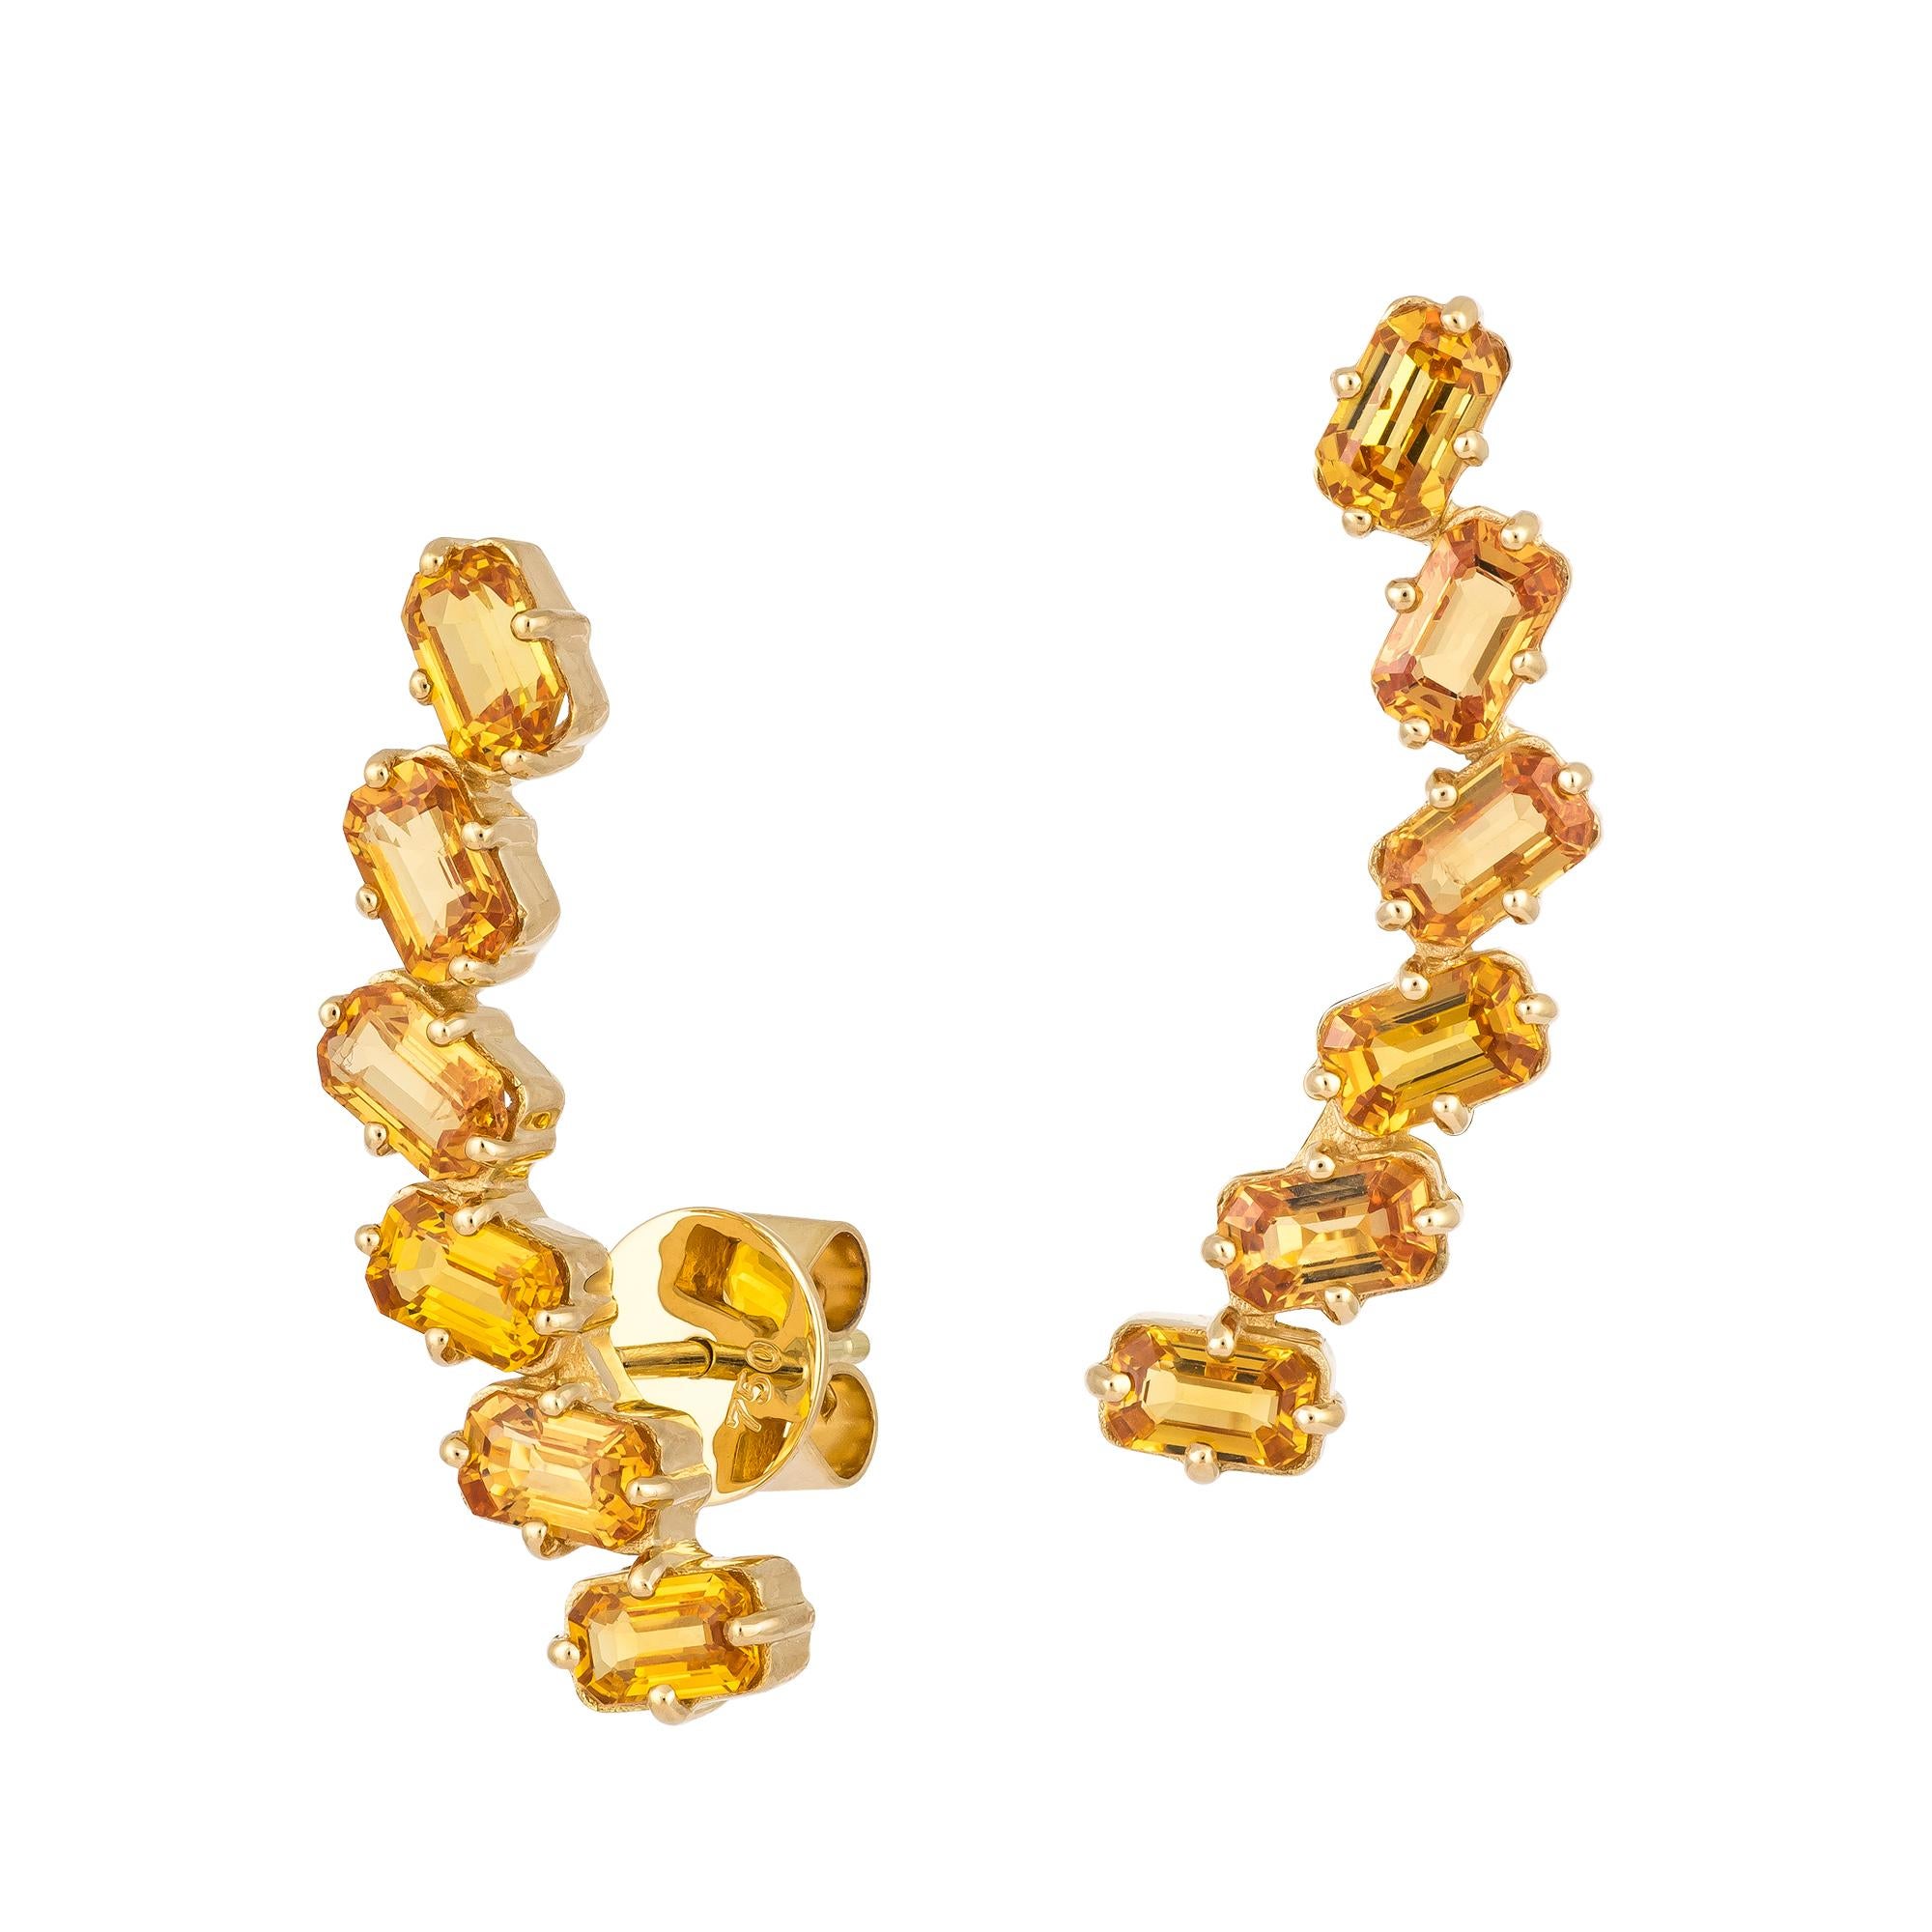 Fashion Diamond White 18 Karat Gold Earrings for Her For Sale 1